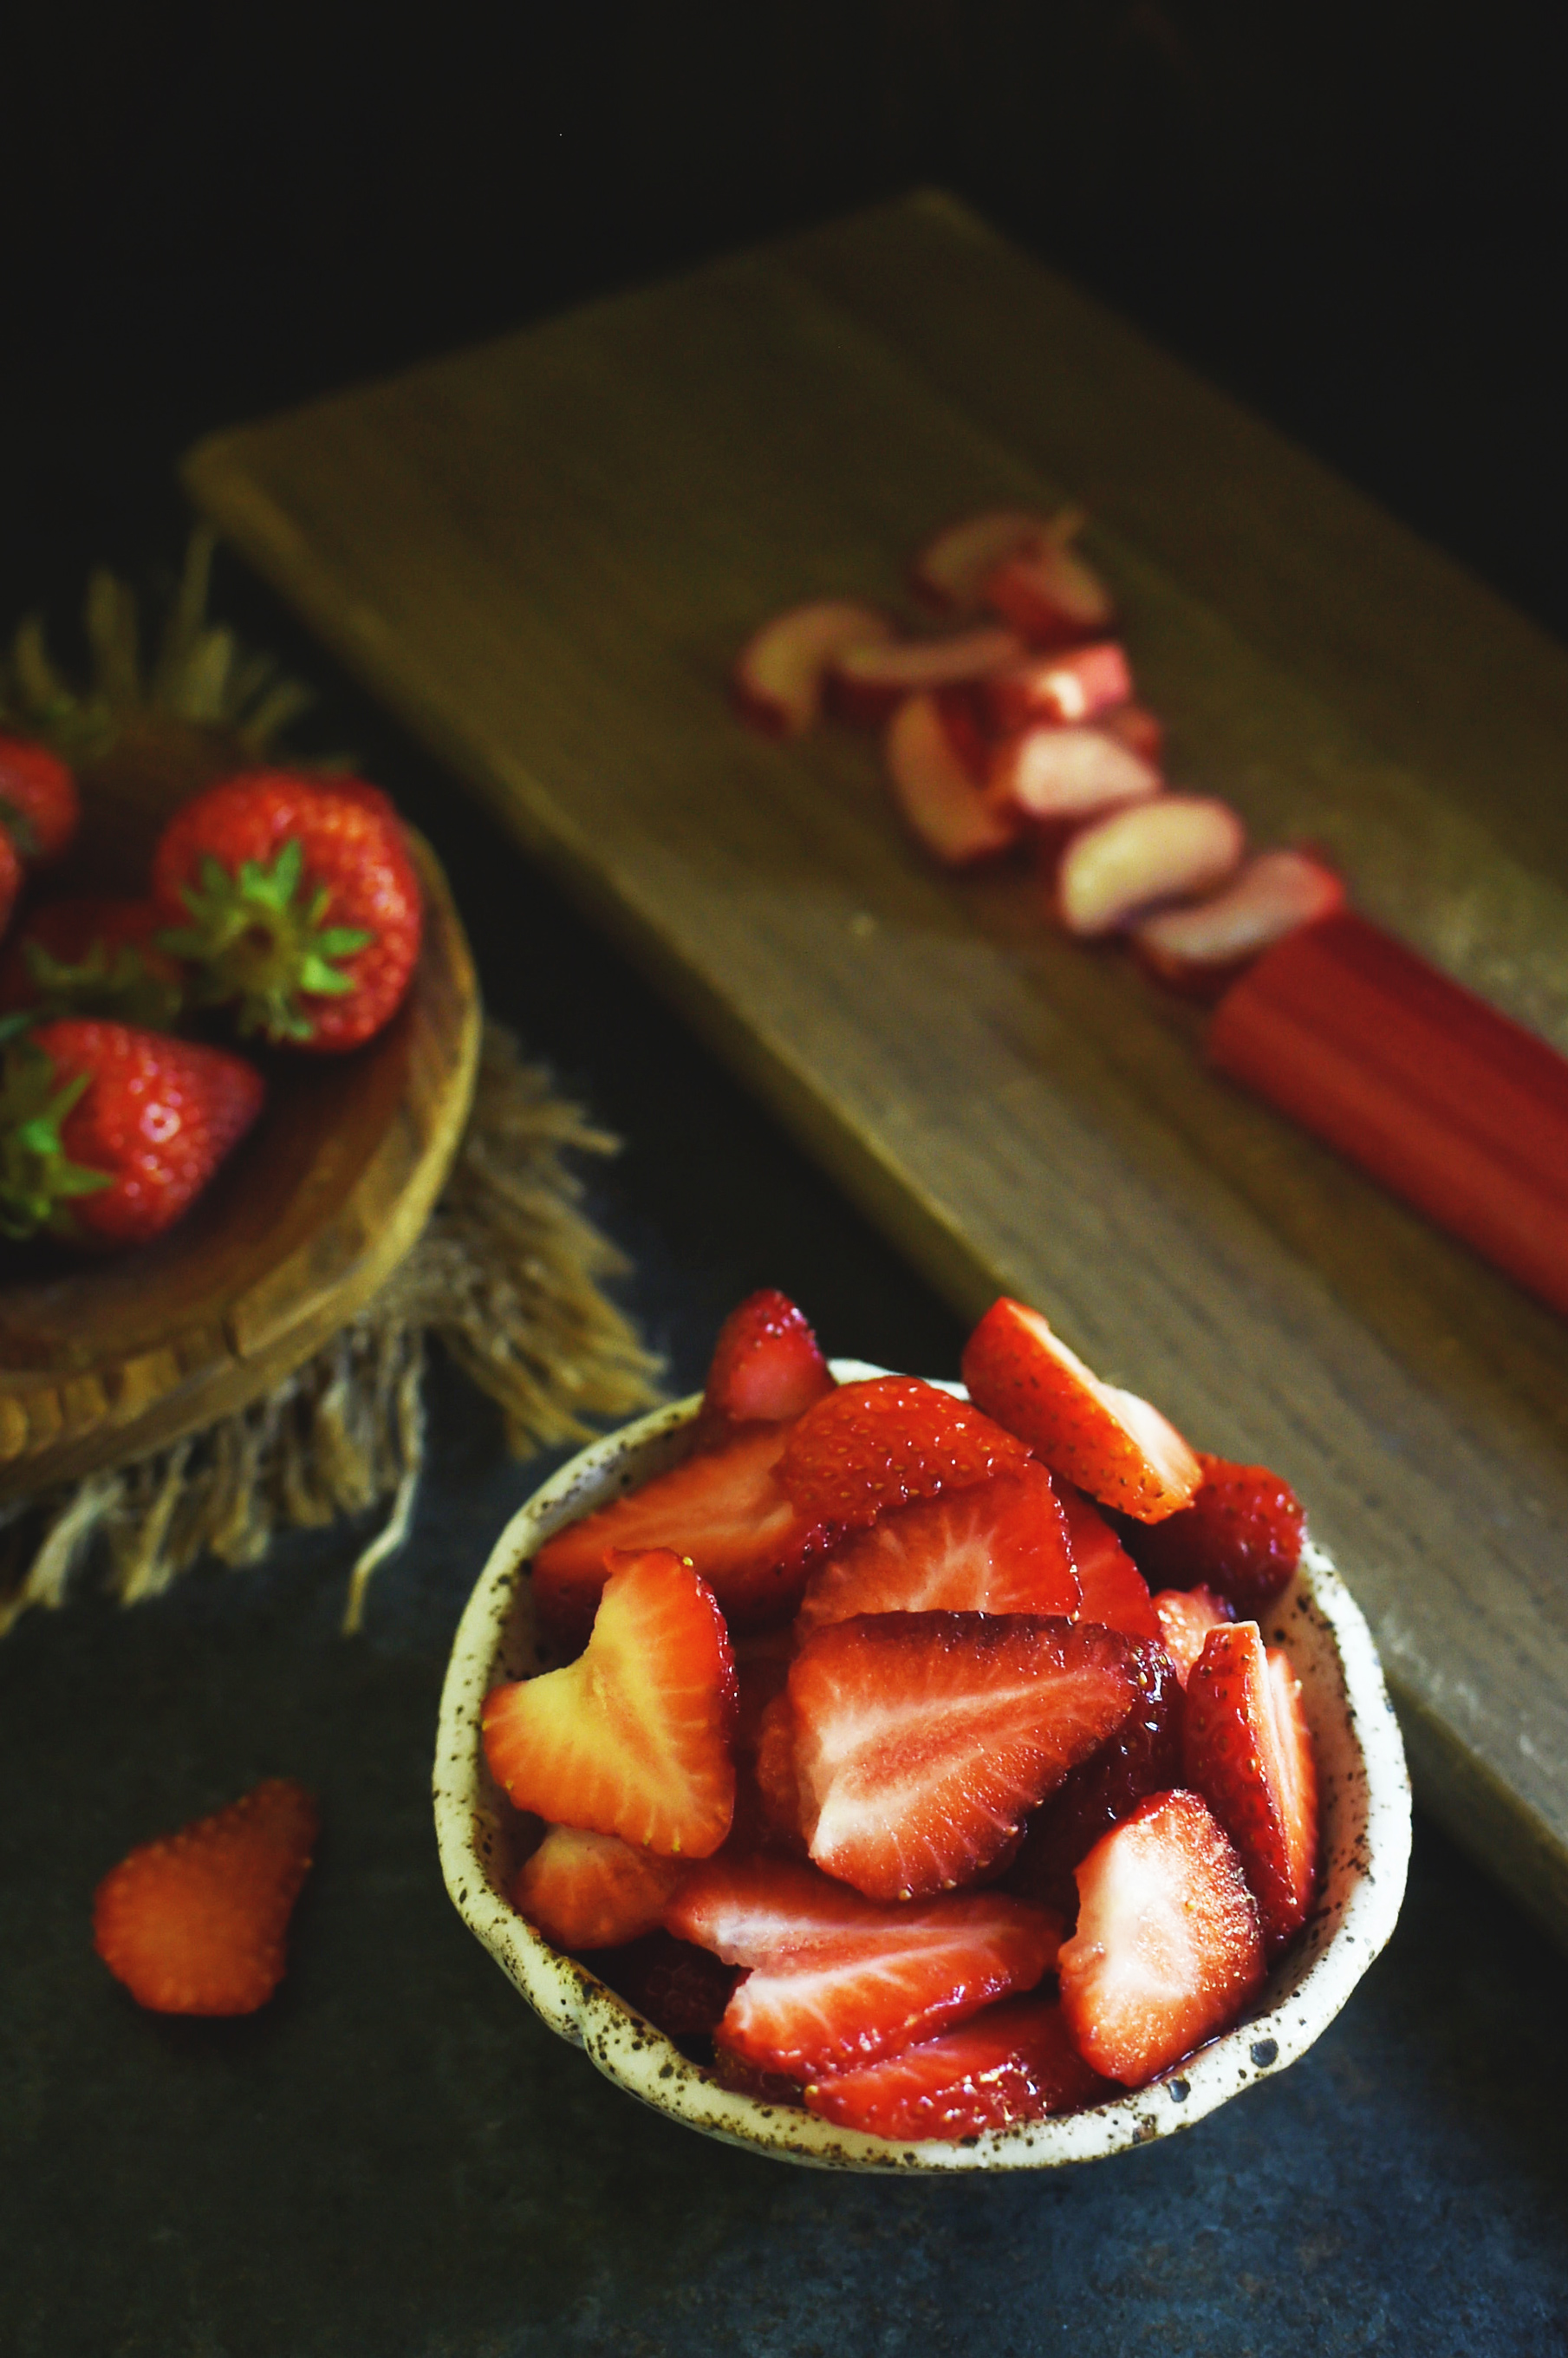 Strawberries and rhubarb, sliced.